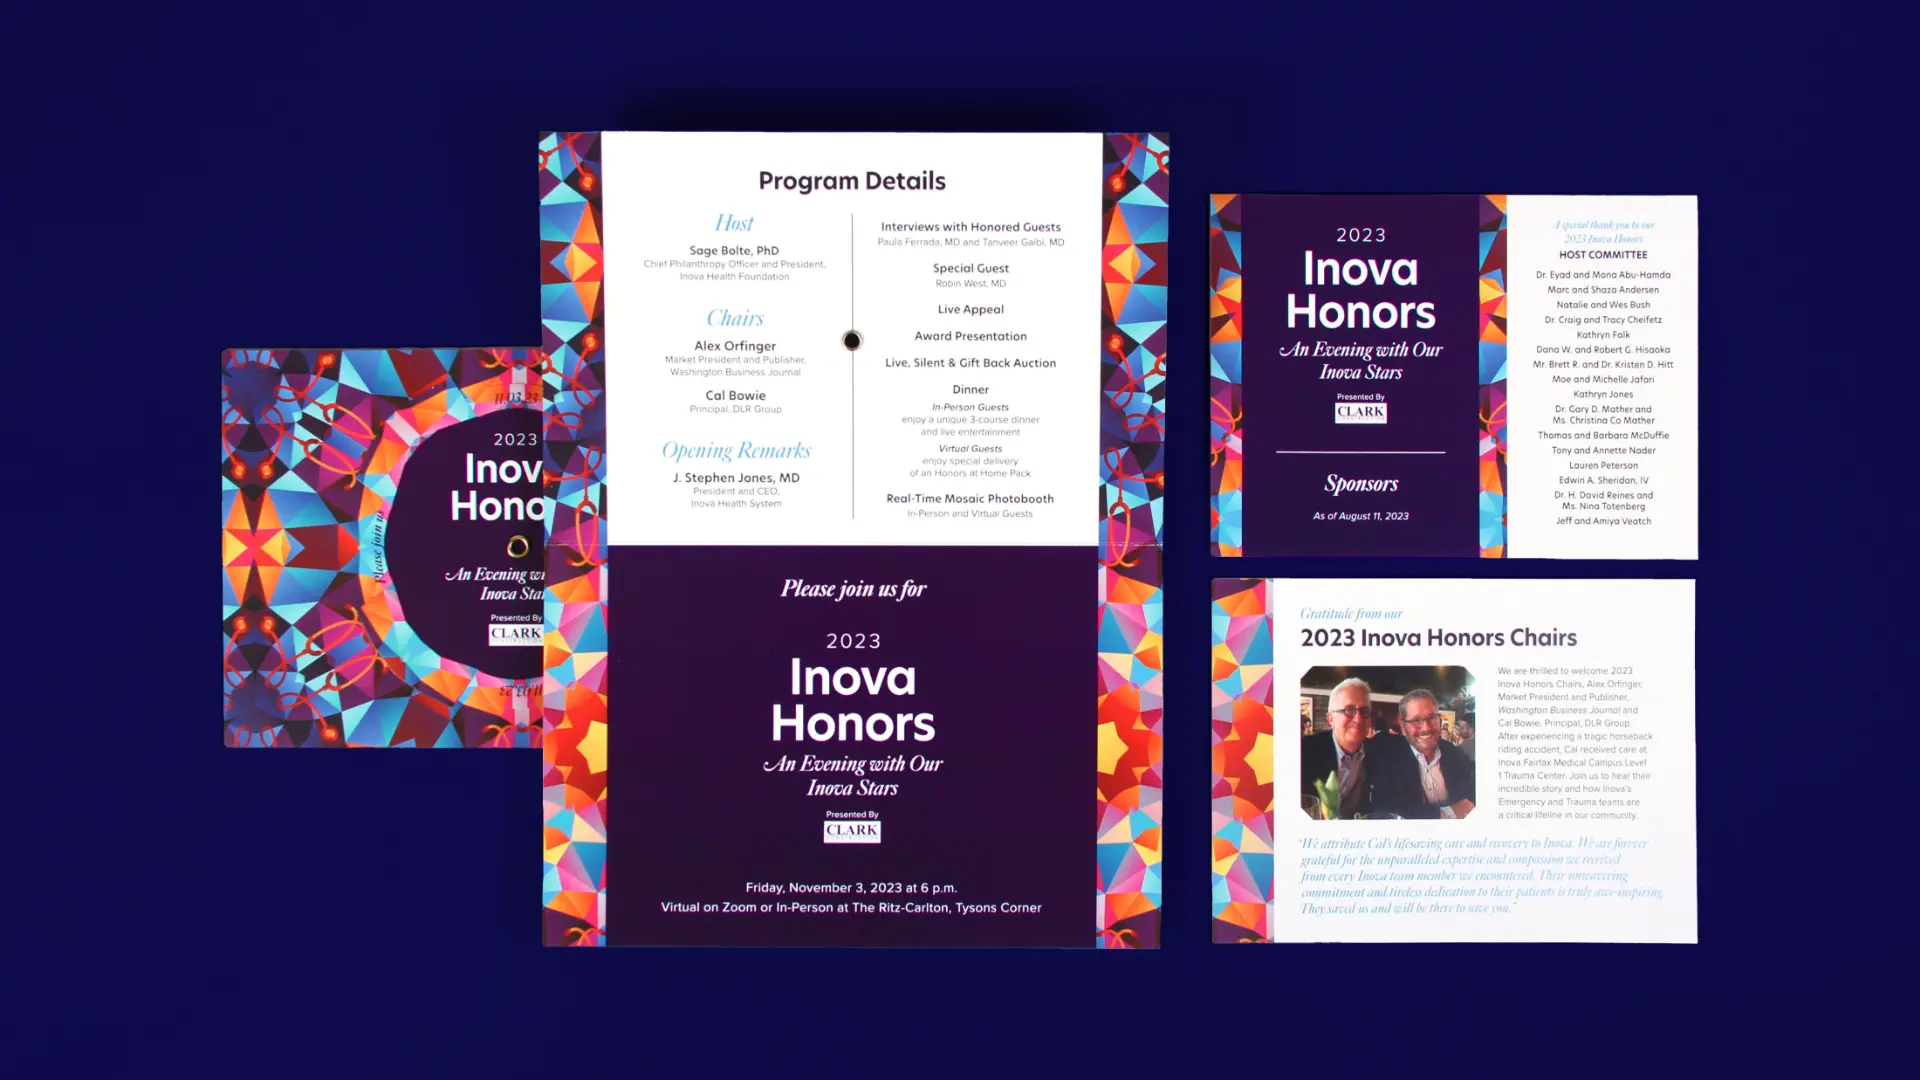 Full invitation package for the Inova Honors Gala.